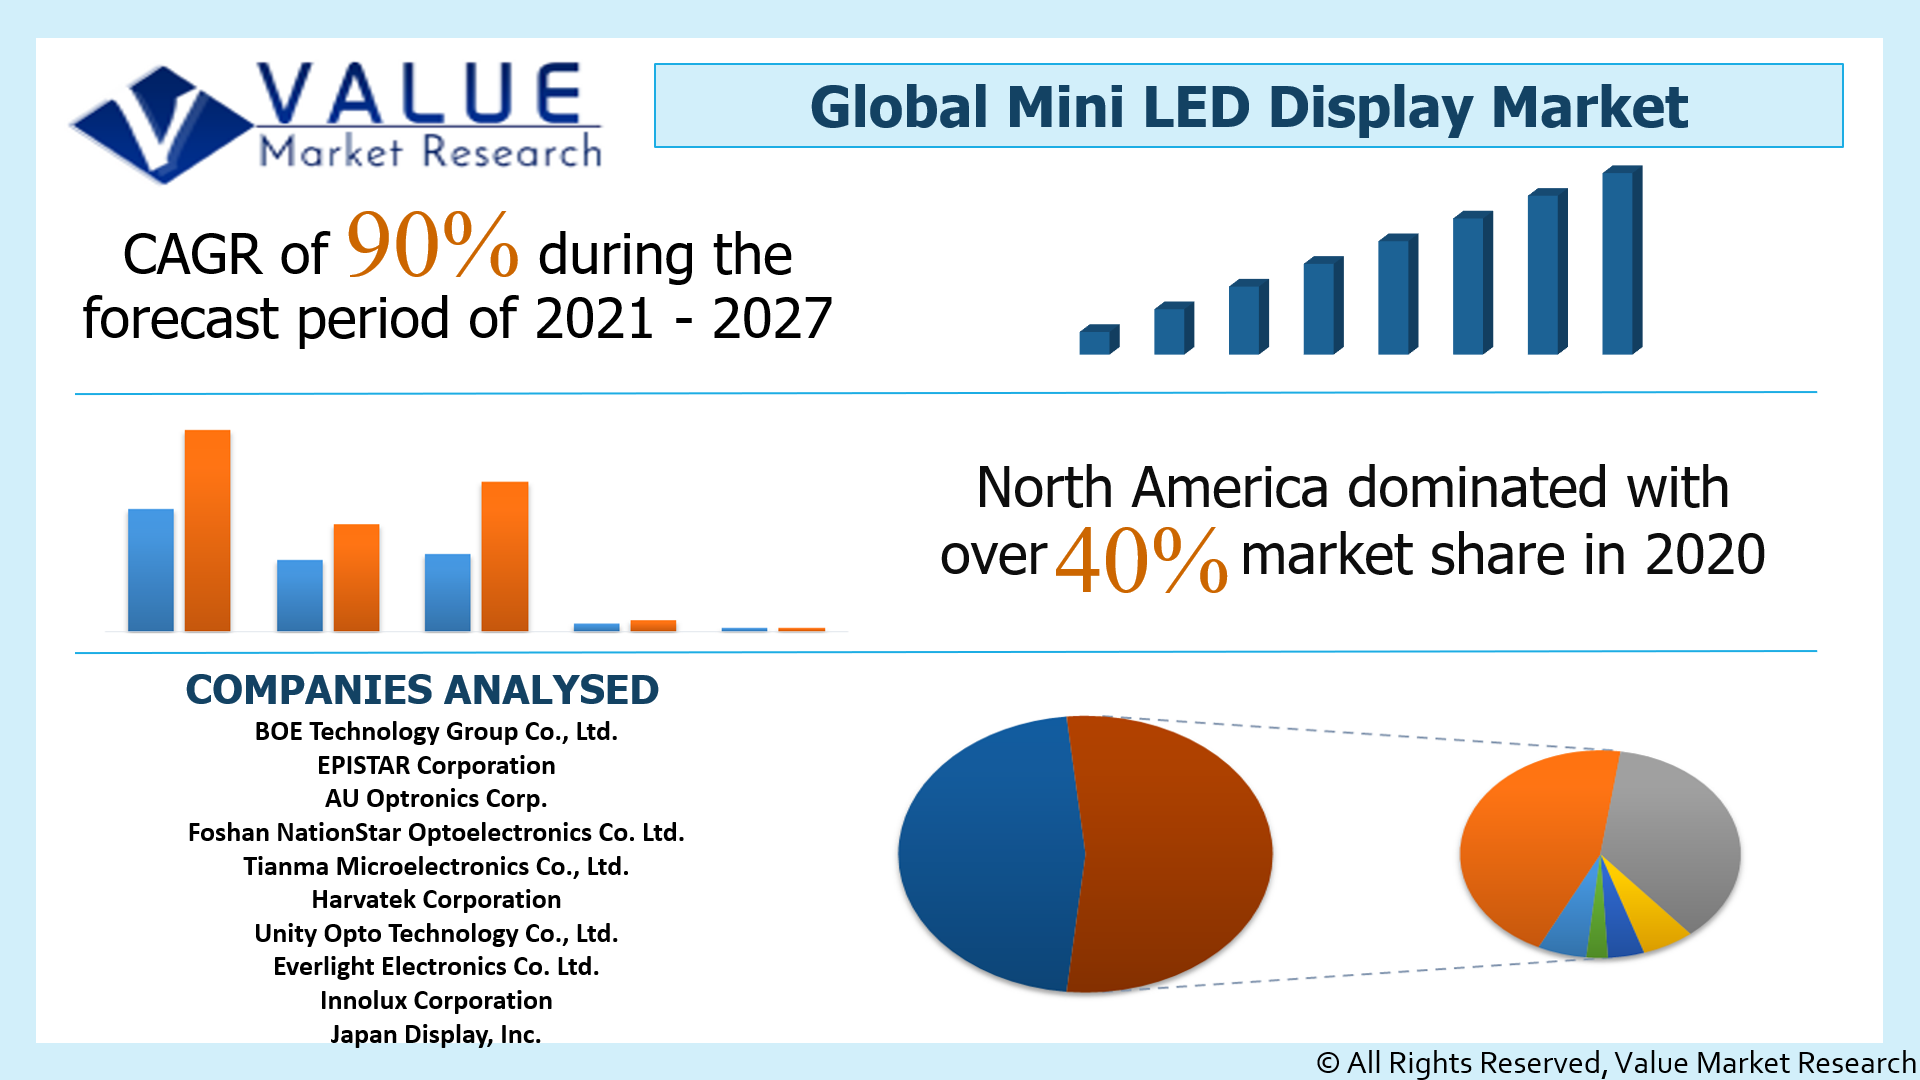 Global Mini LED Display Market Share